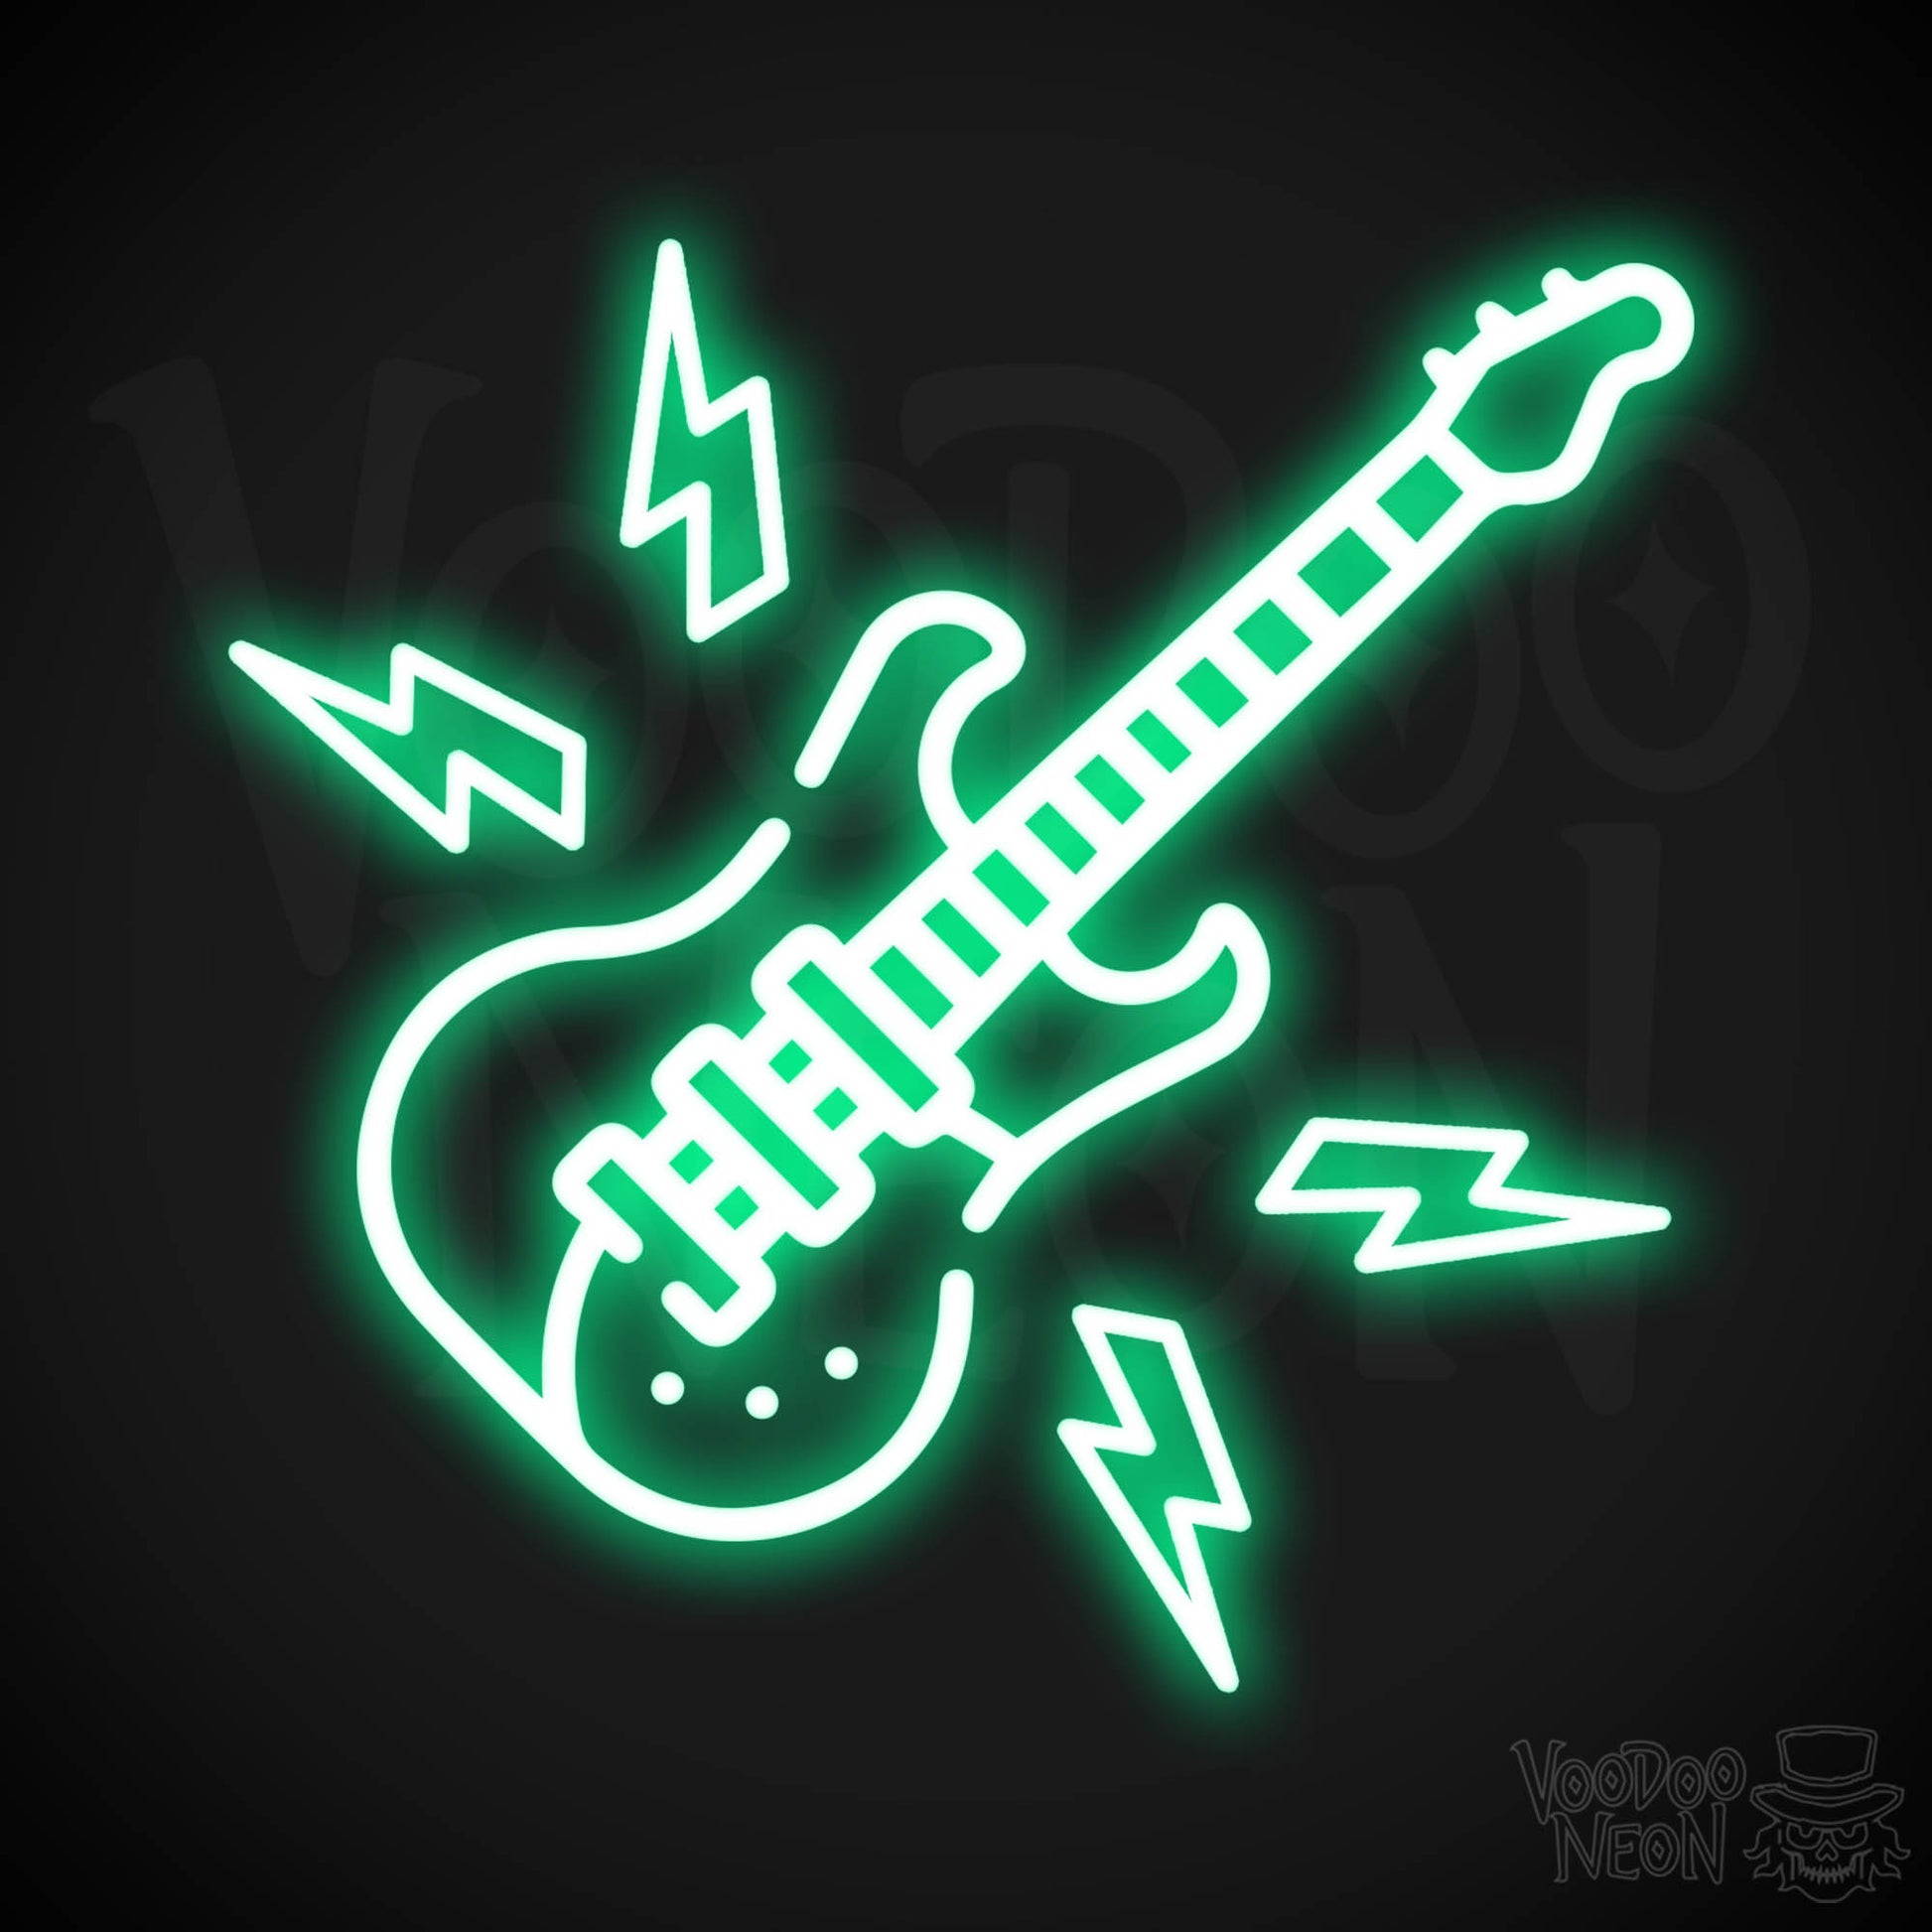 Neon Electric Guitar Sign - Electric Guitar Neon Sign - Electric Guitar Neon Wall Art - Color Green